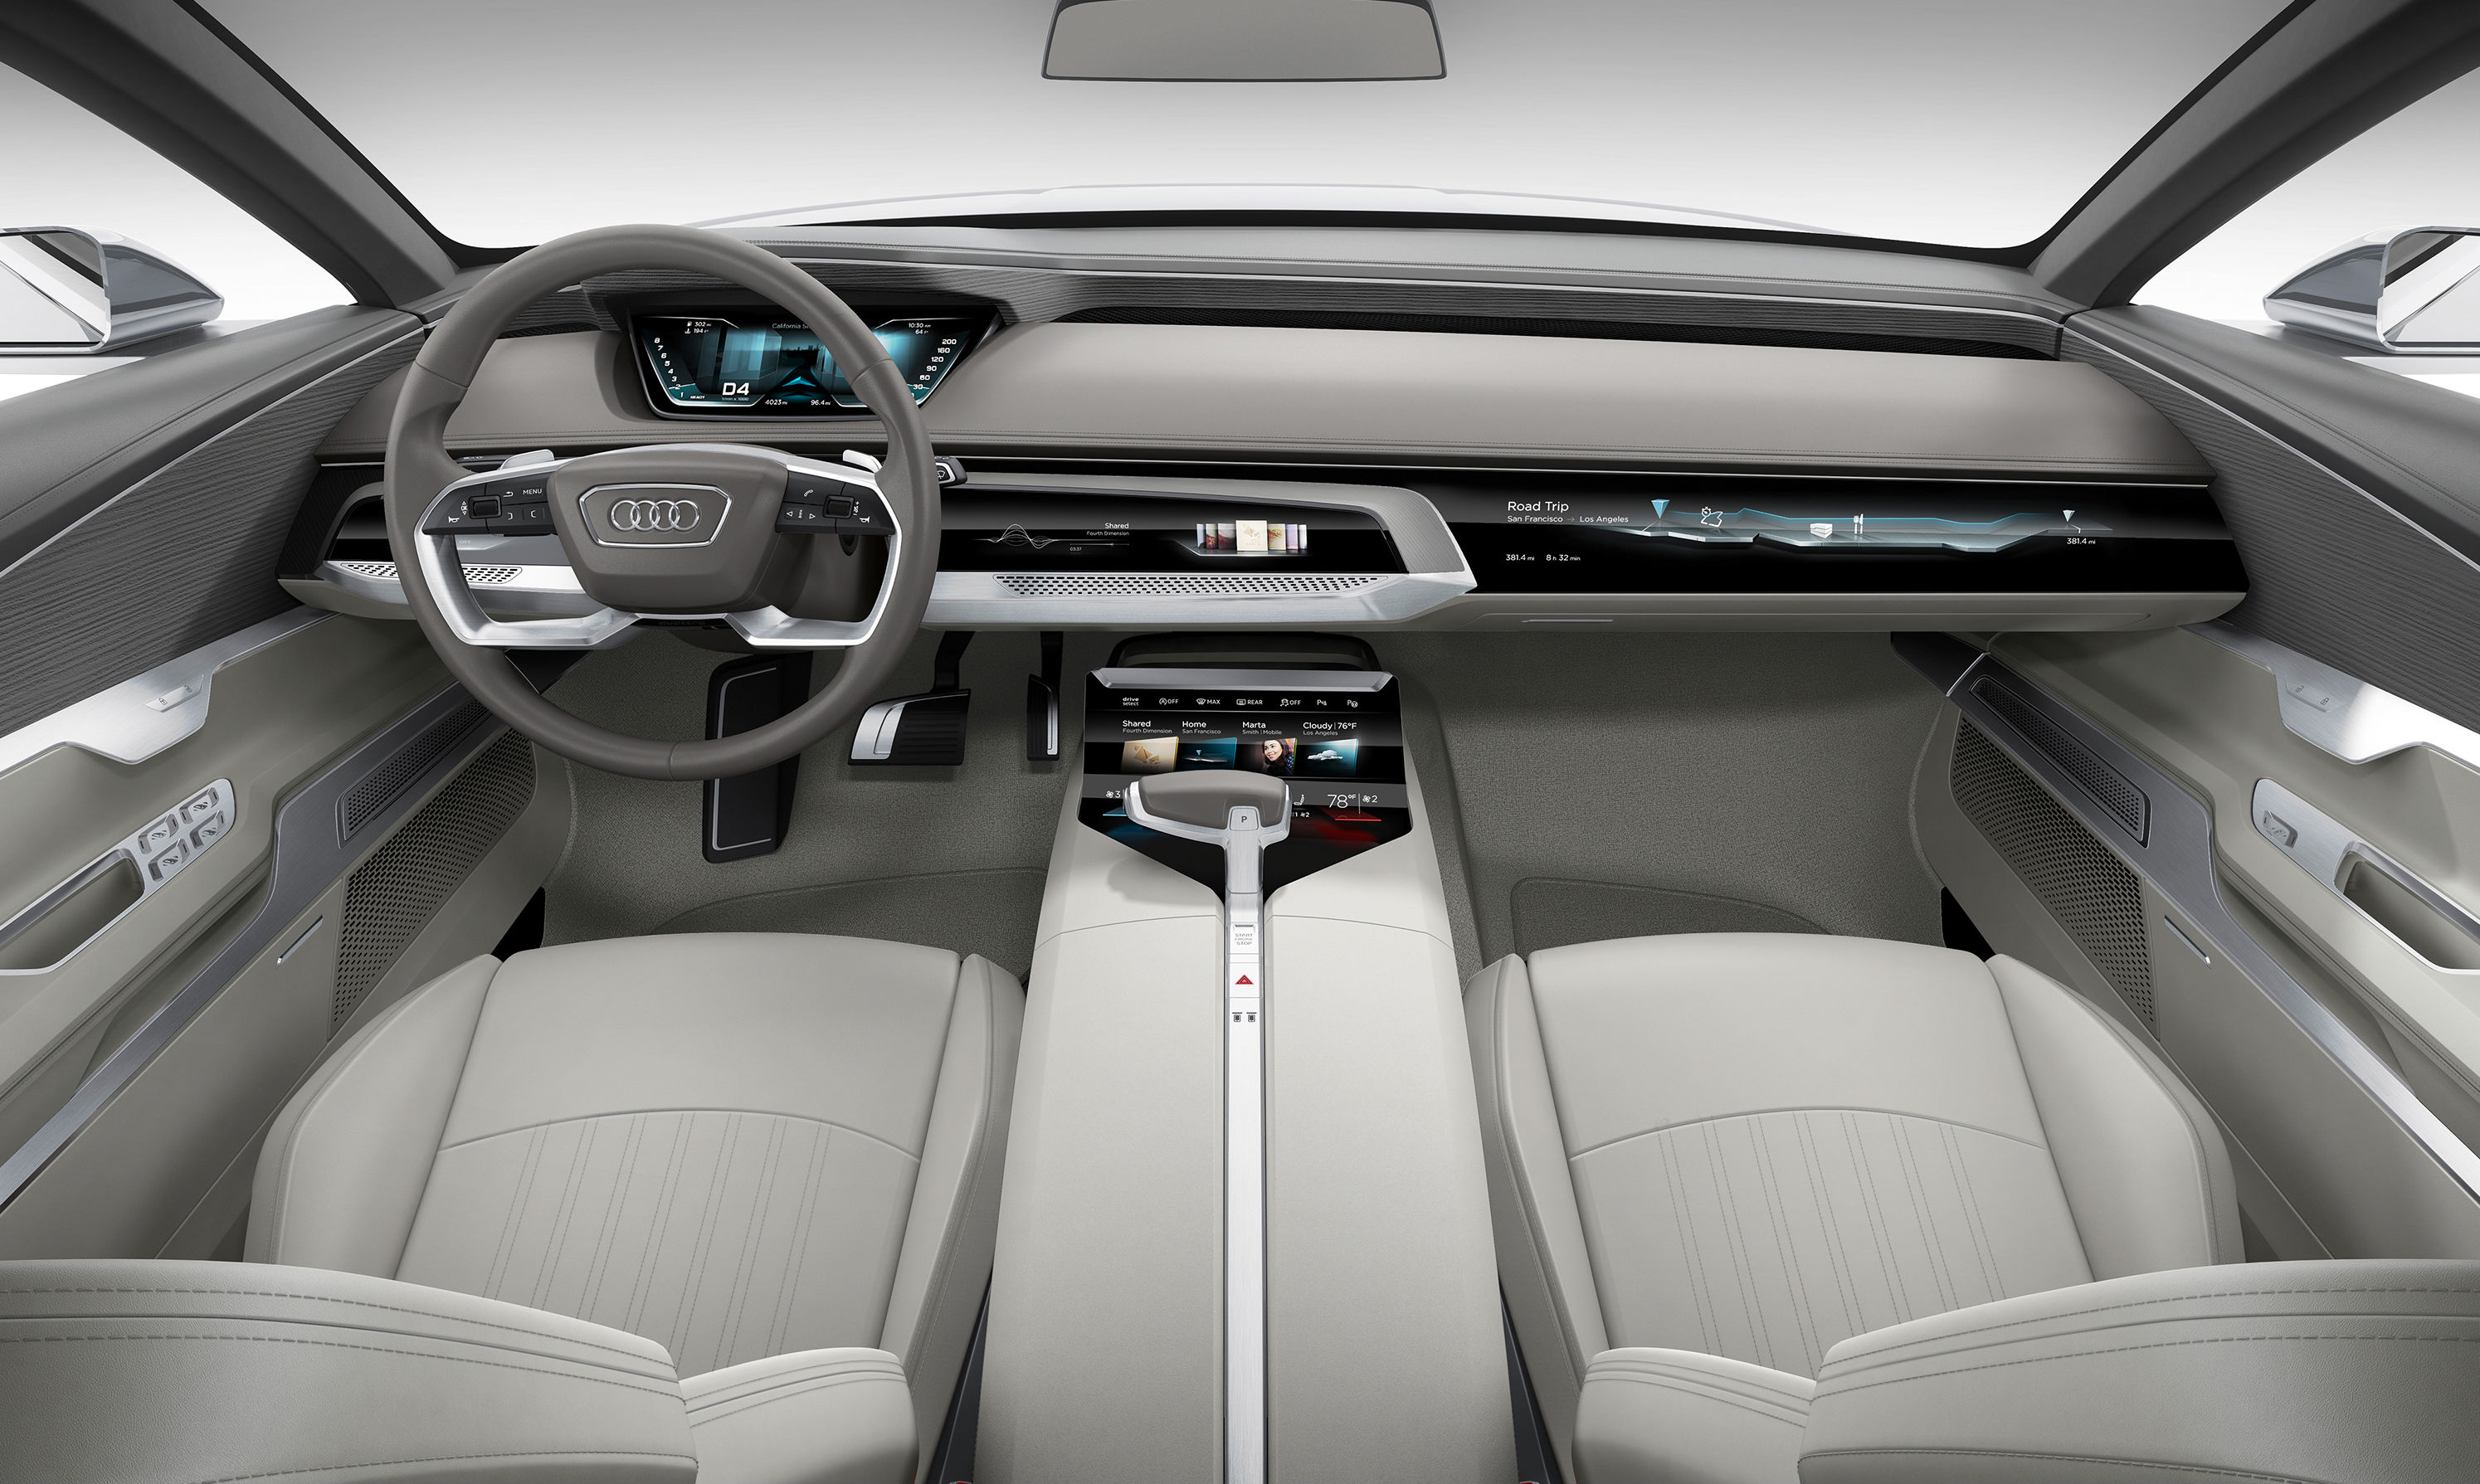 Audi Prologue interior design